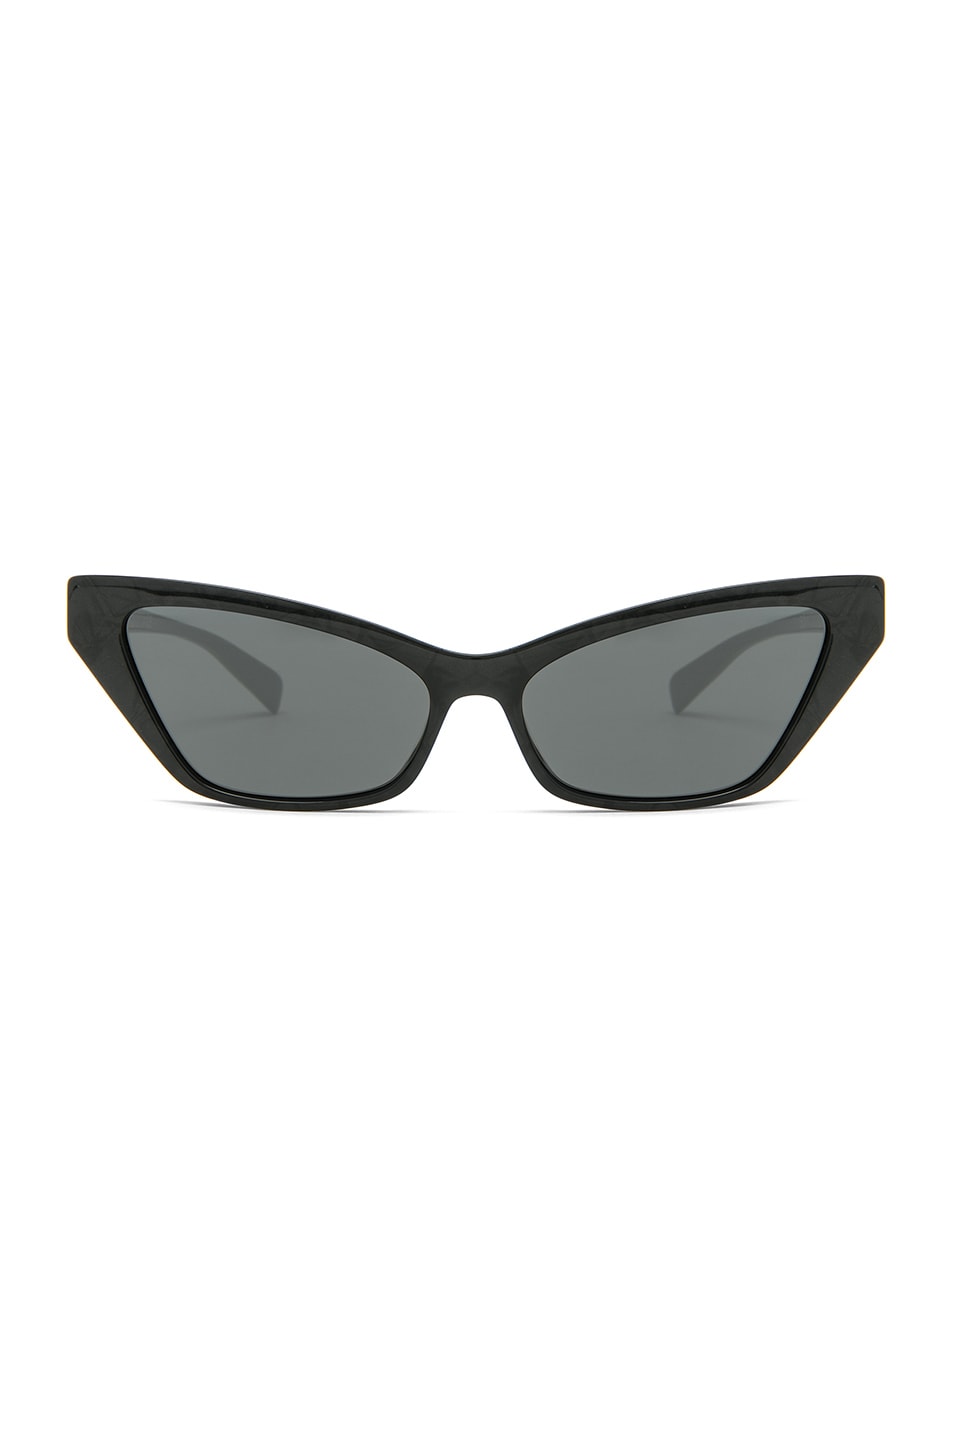 Image 1 of Oliver Peoples x Alain Mikli Le Matin Sunglasses in Noir & Dark Grey